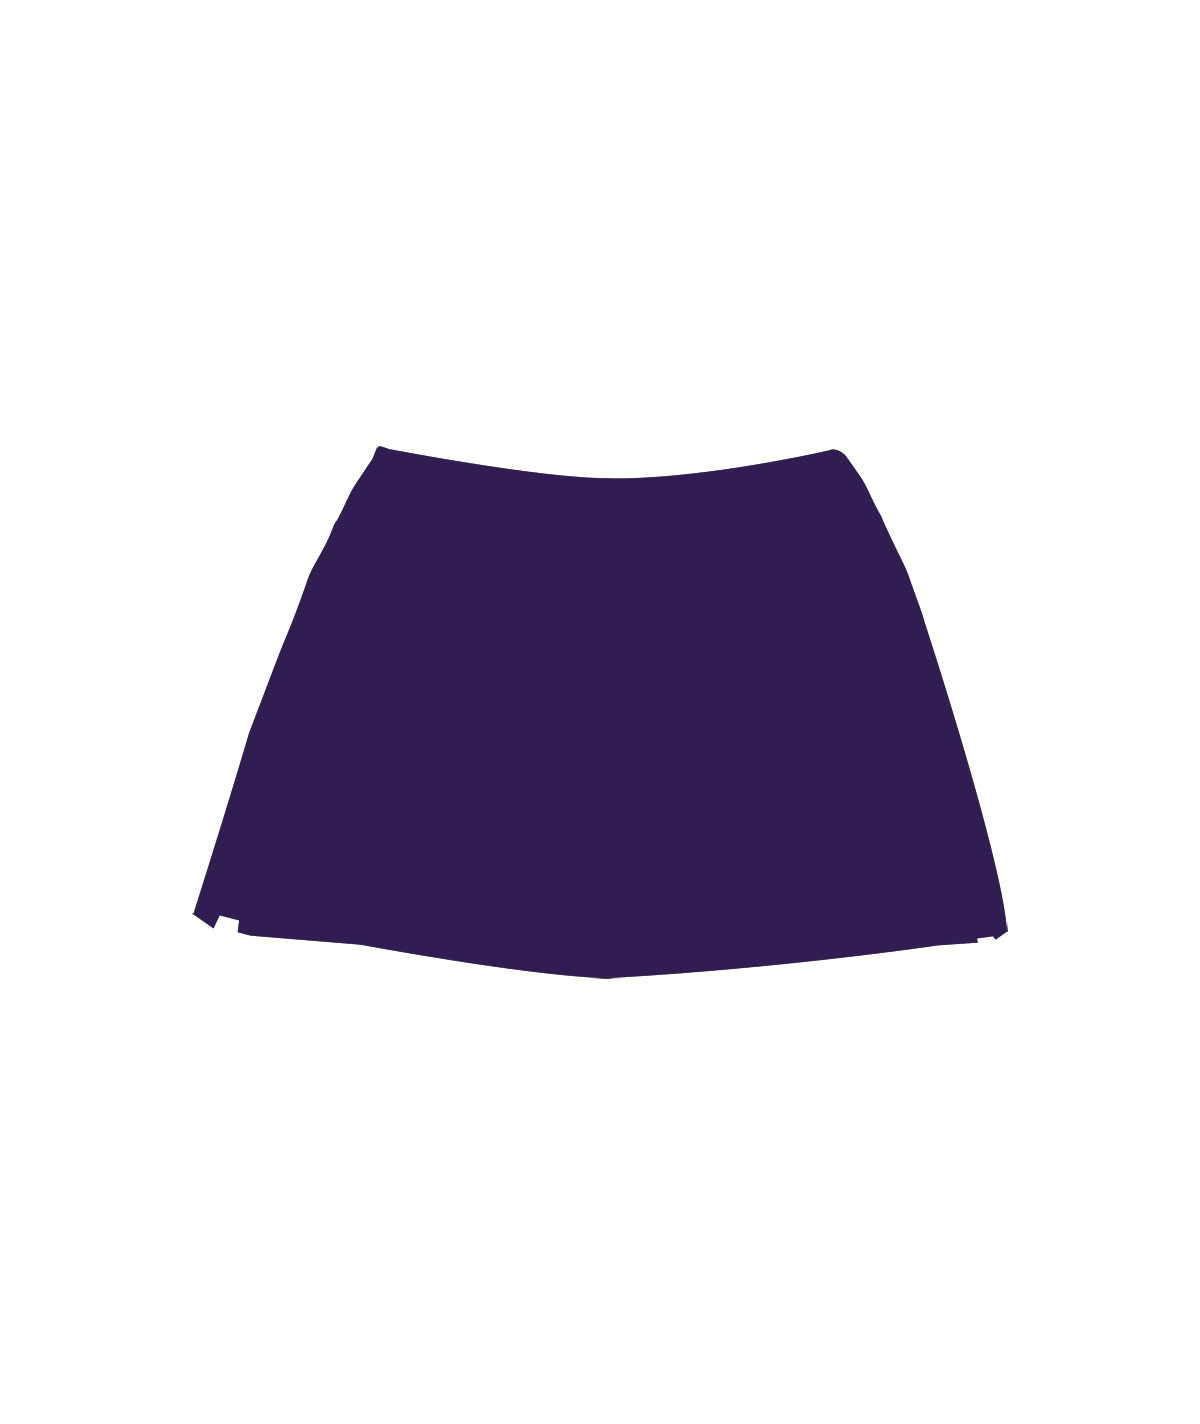 GK Sublimated Skirt Fit Kit